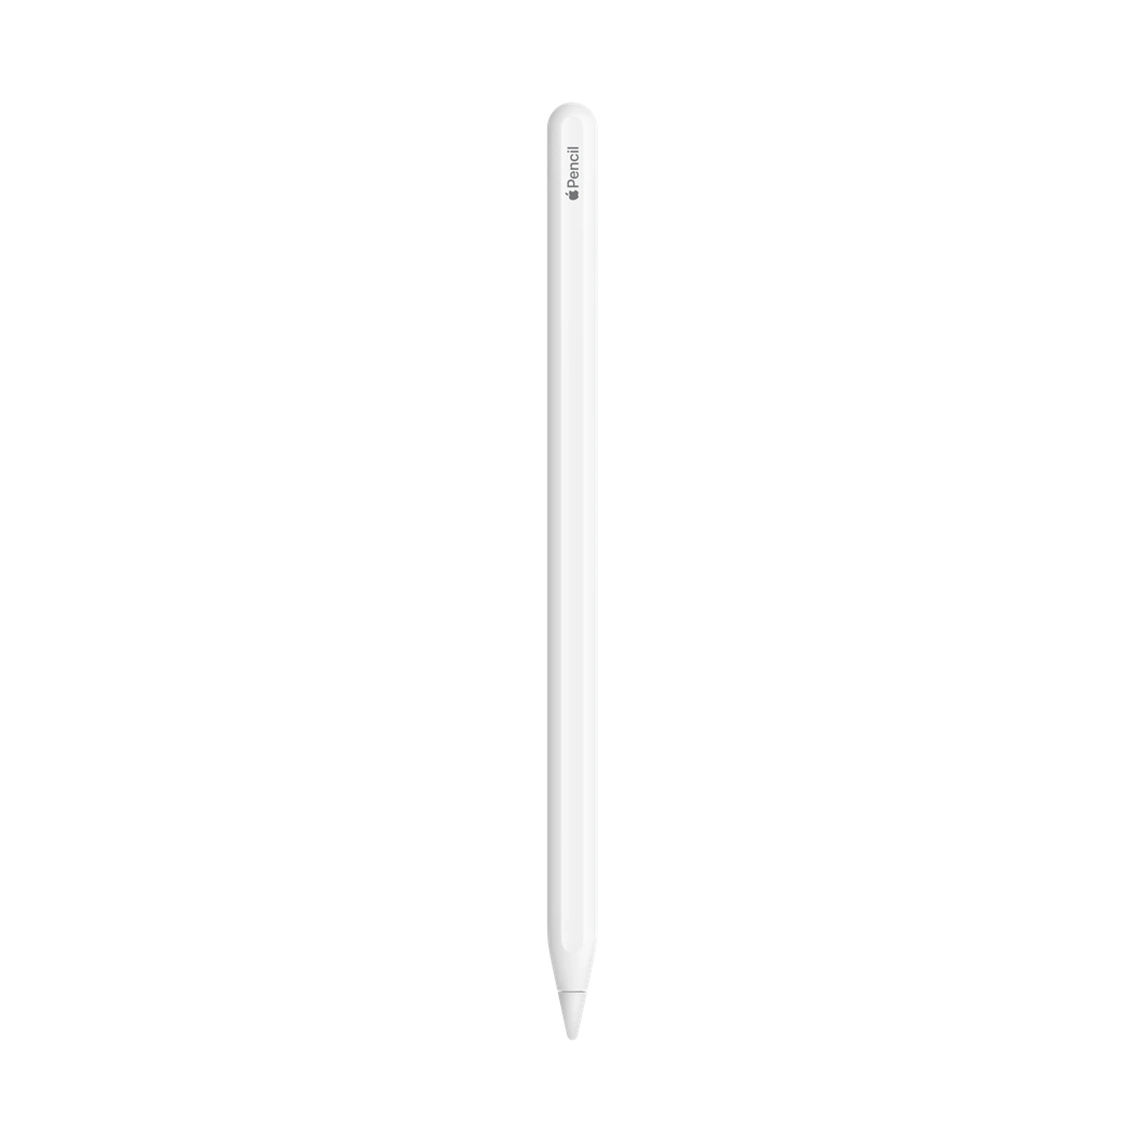 Apple iPad Pro M1 11-inch 256GB Wi-Fi+Cellular-1